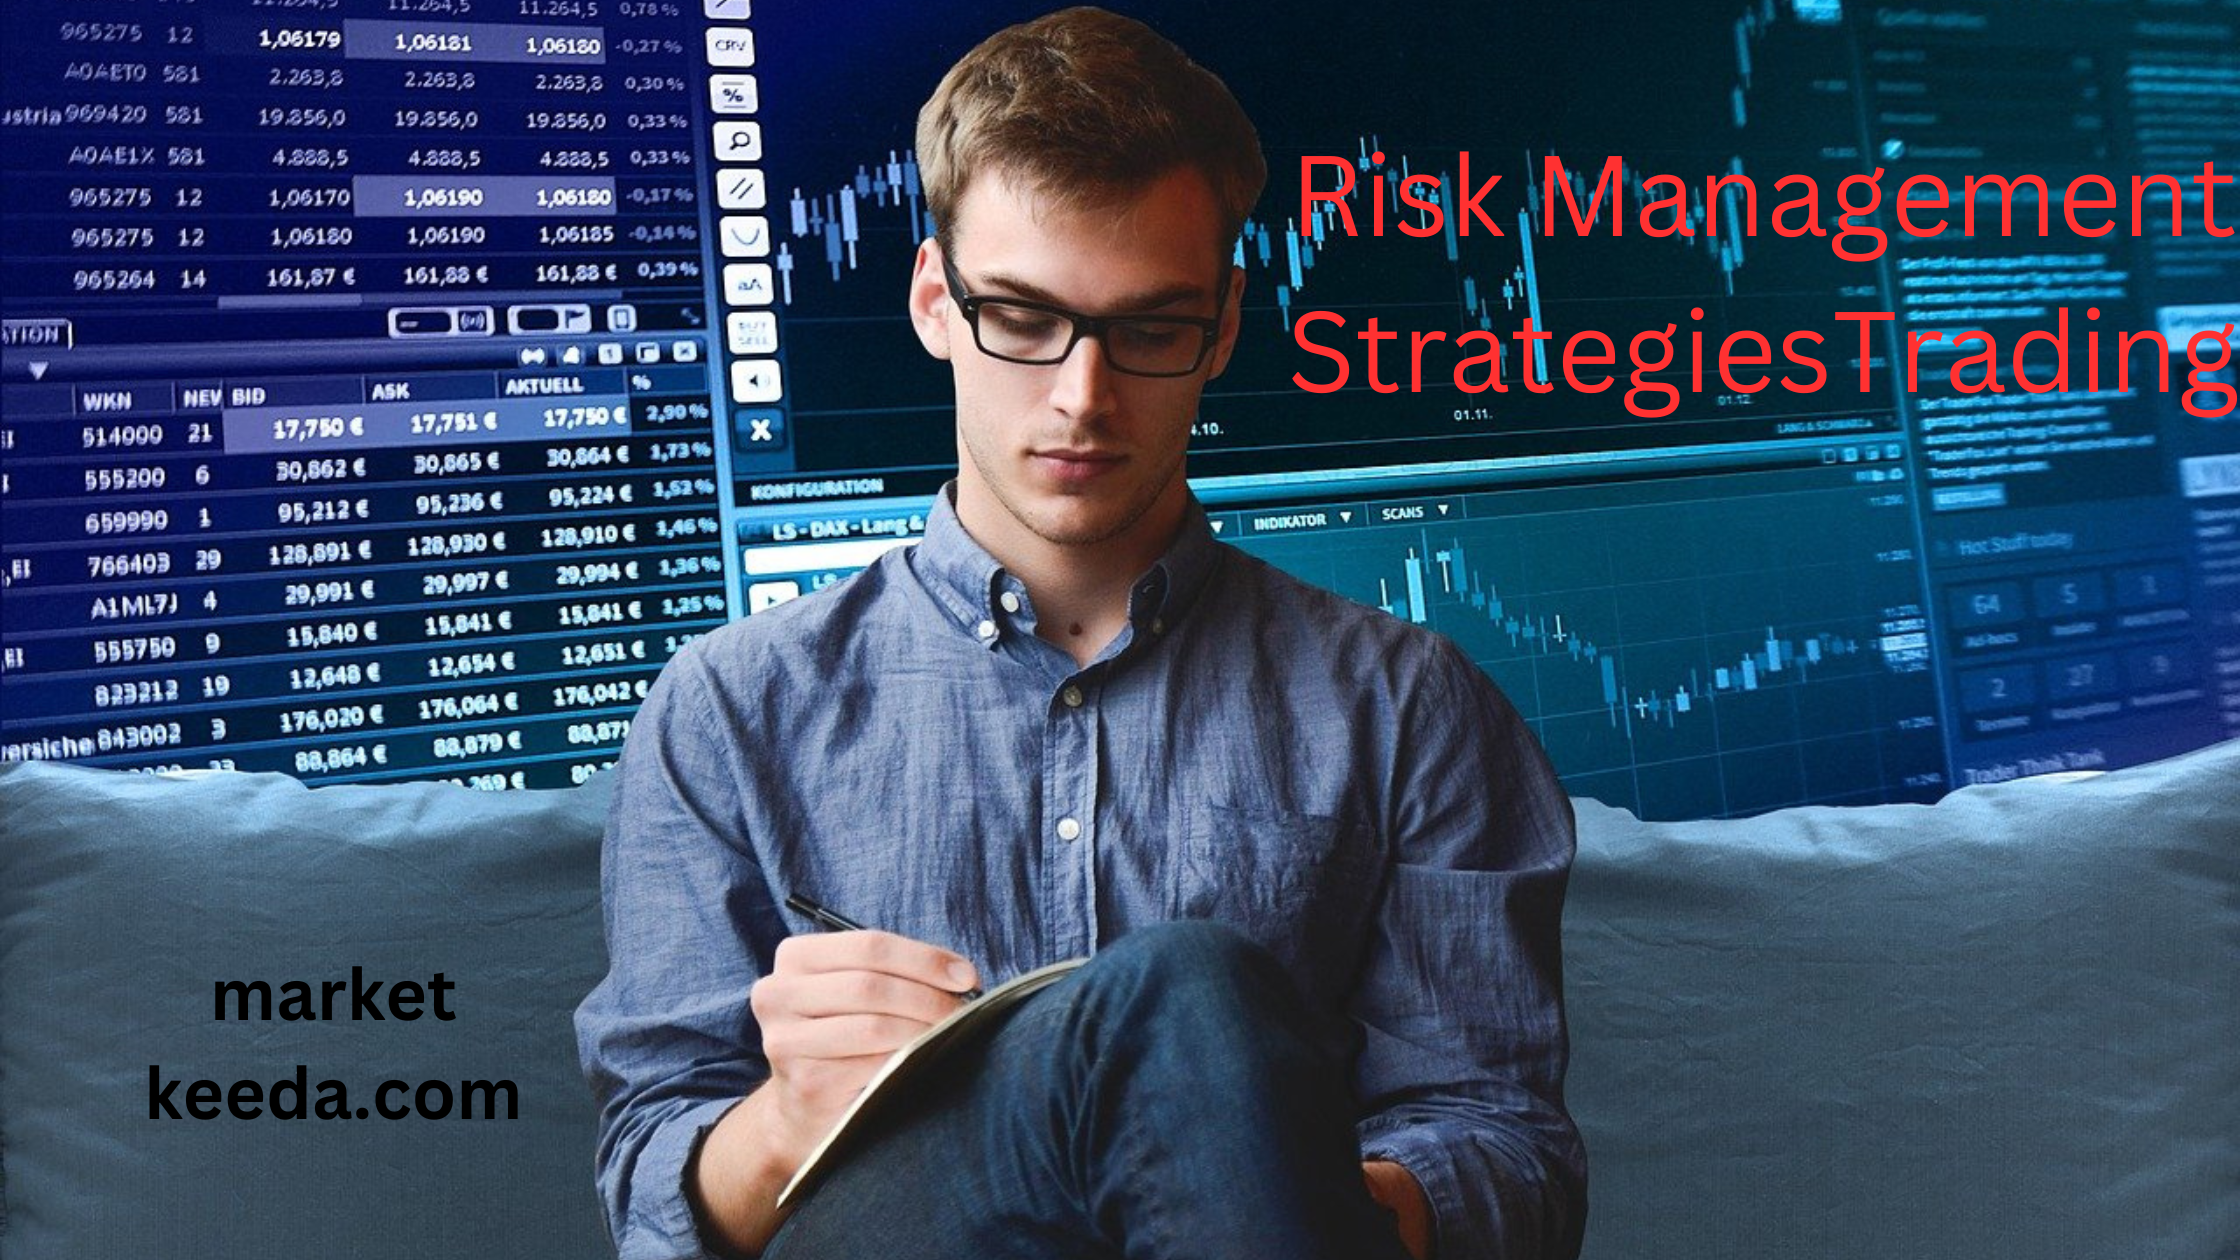 Risk management trading